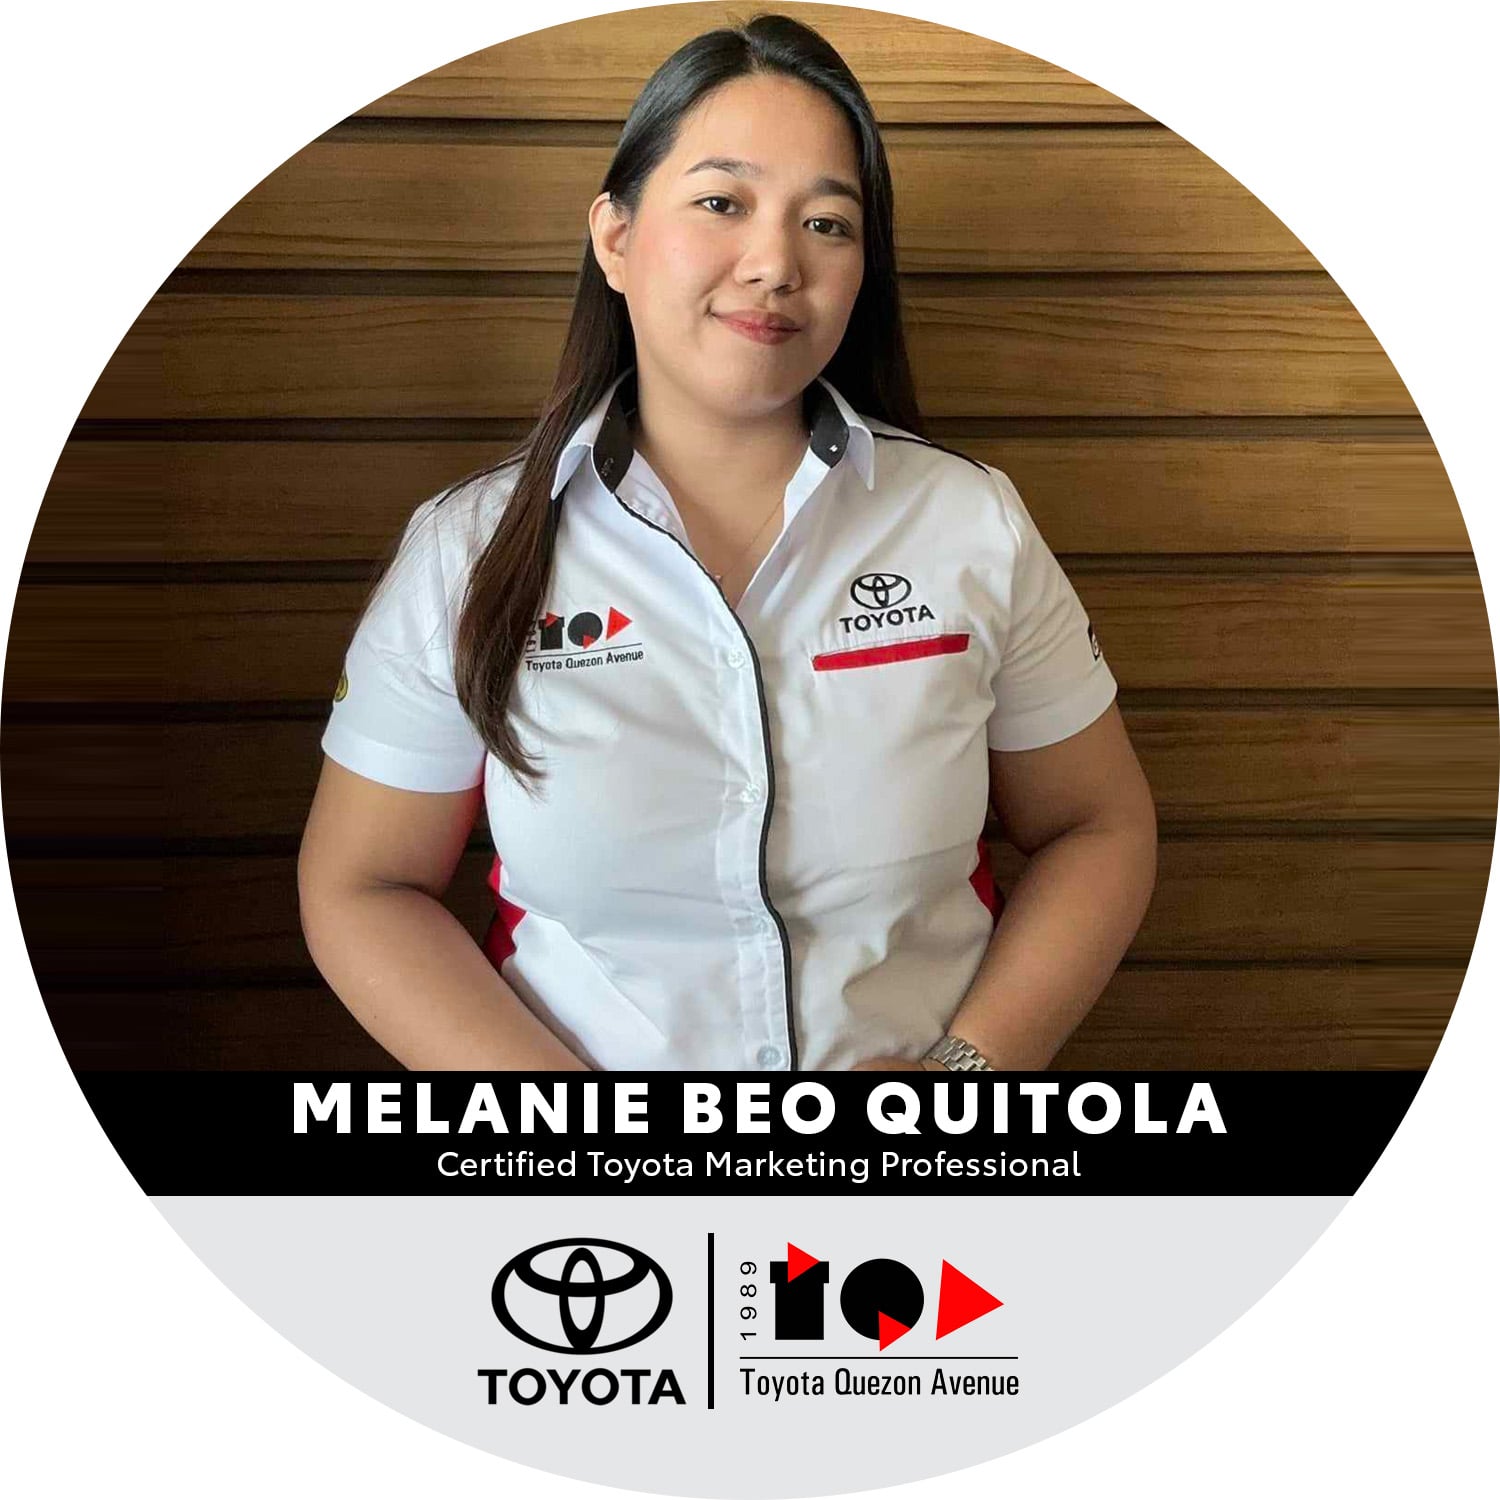 Certified Toyota Marketing Professionals - Melanie Beo Quitola